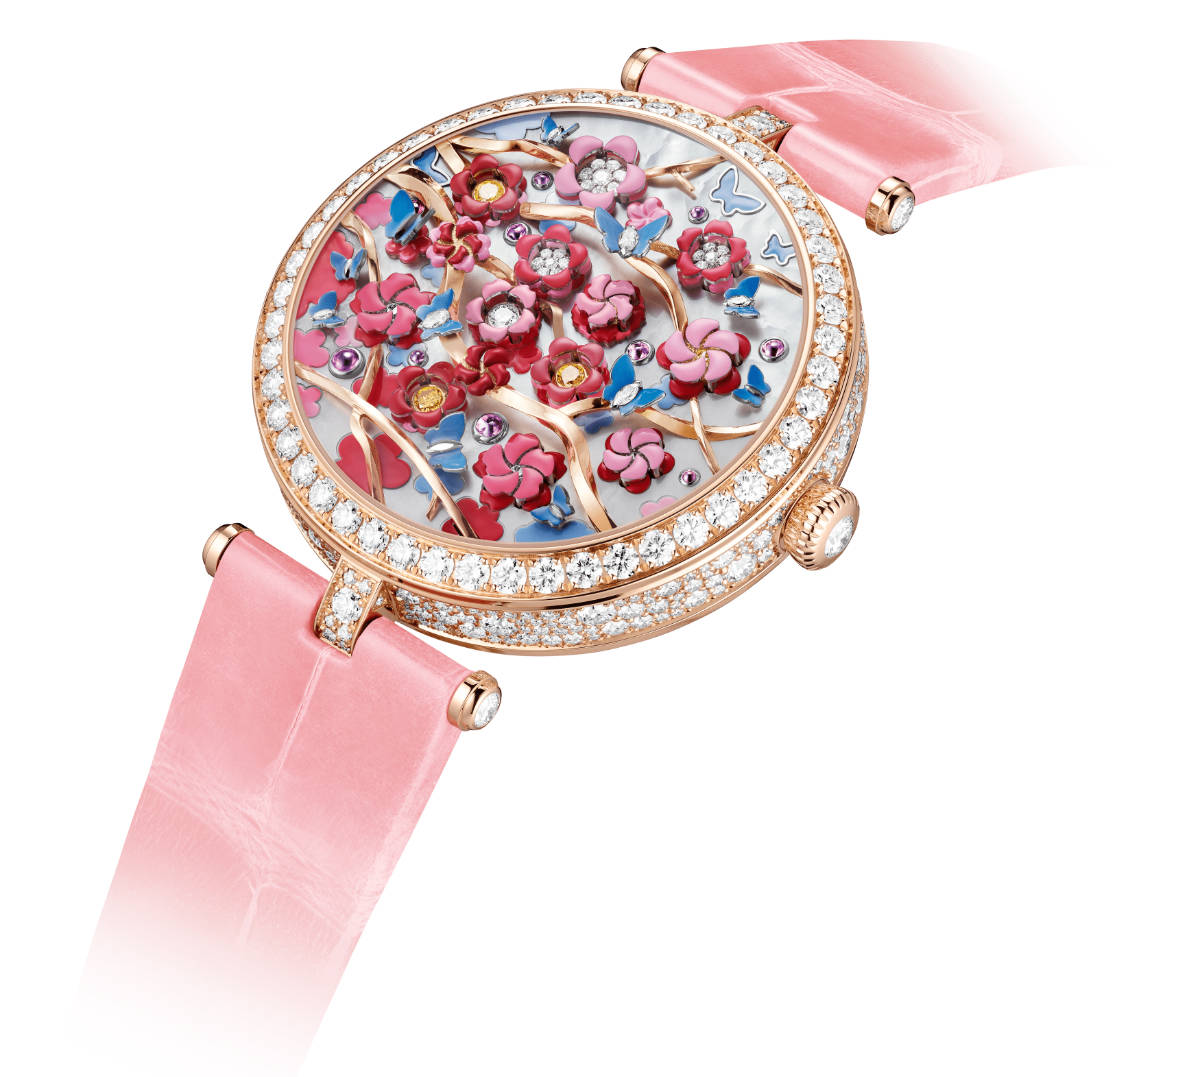 Van Cleef & Arpels Presentiert New Lady Arpels Heures Florales Watches